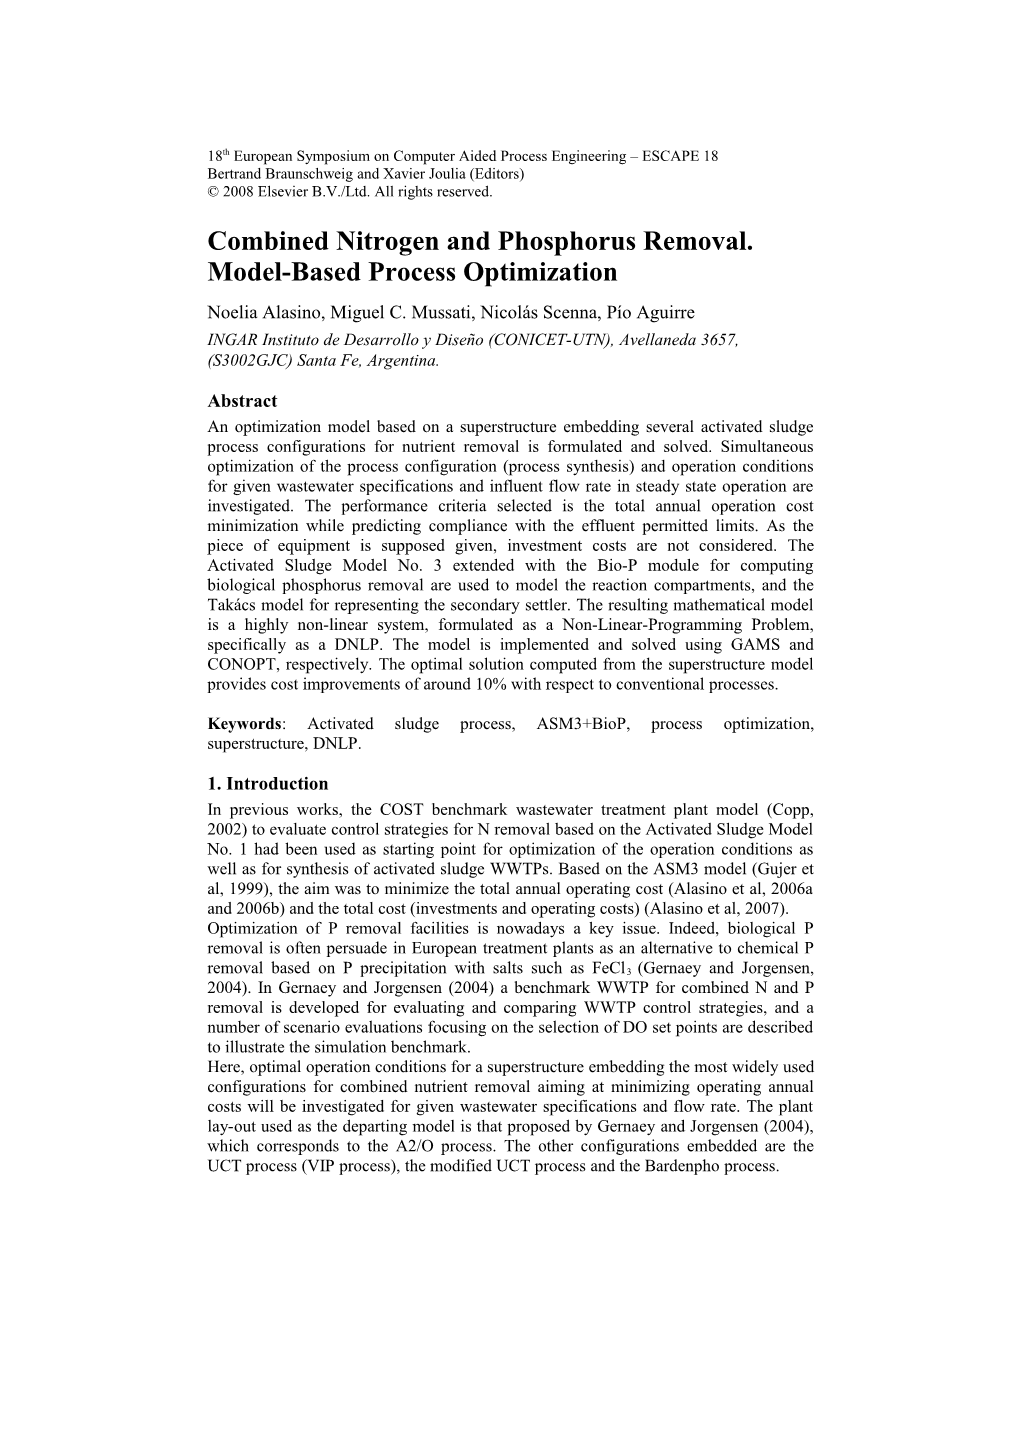 Combined Nitrogen and Phosphorus Removal. Model-Based Process Optimization